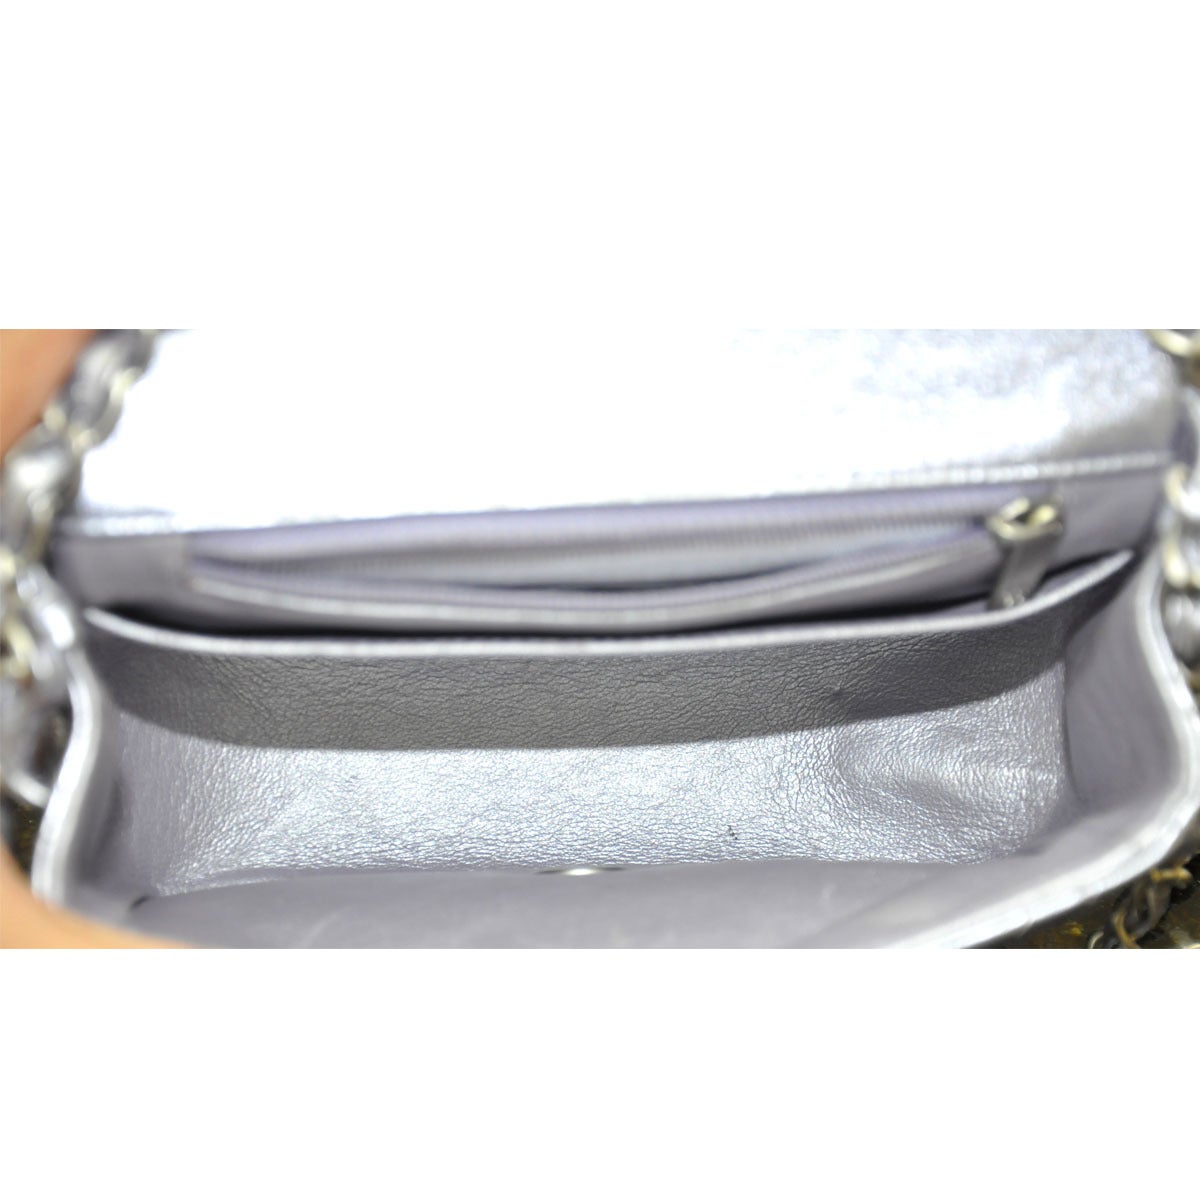 Chanel Lavender Metallic Leather Mini Flap Shoulder Bag Handbag 2